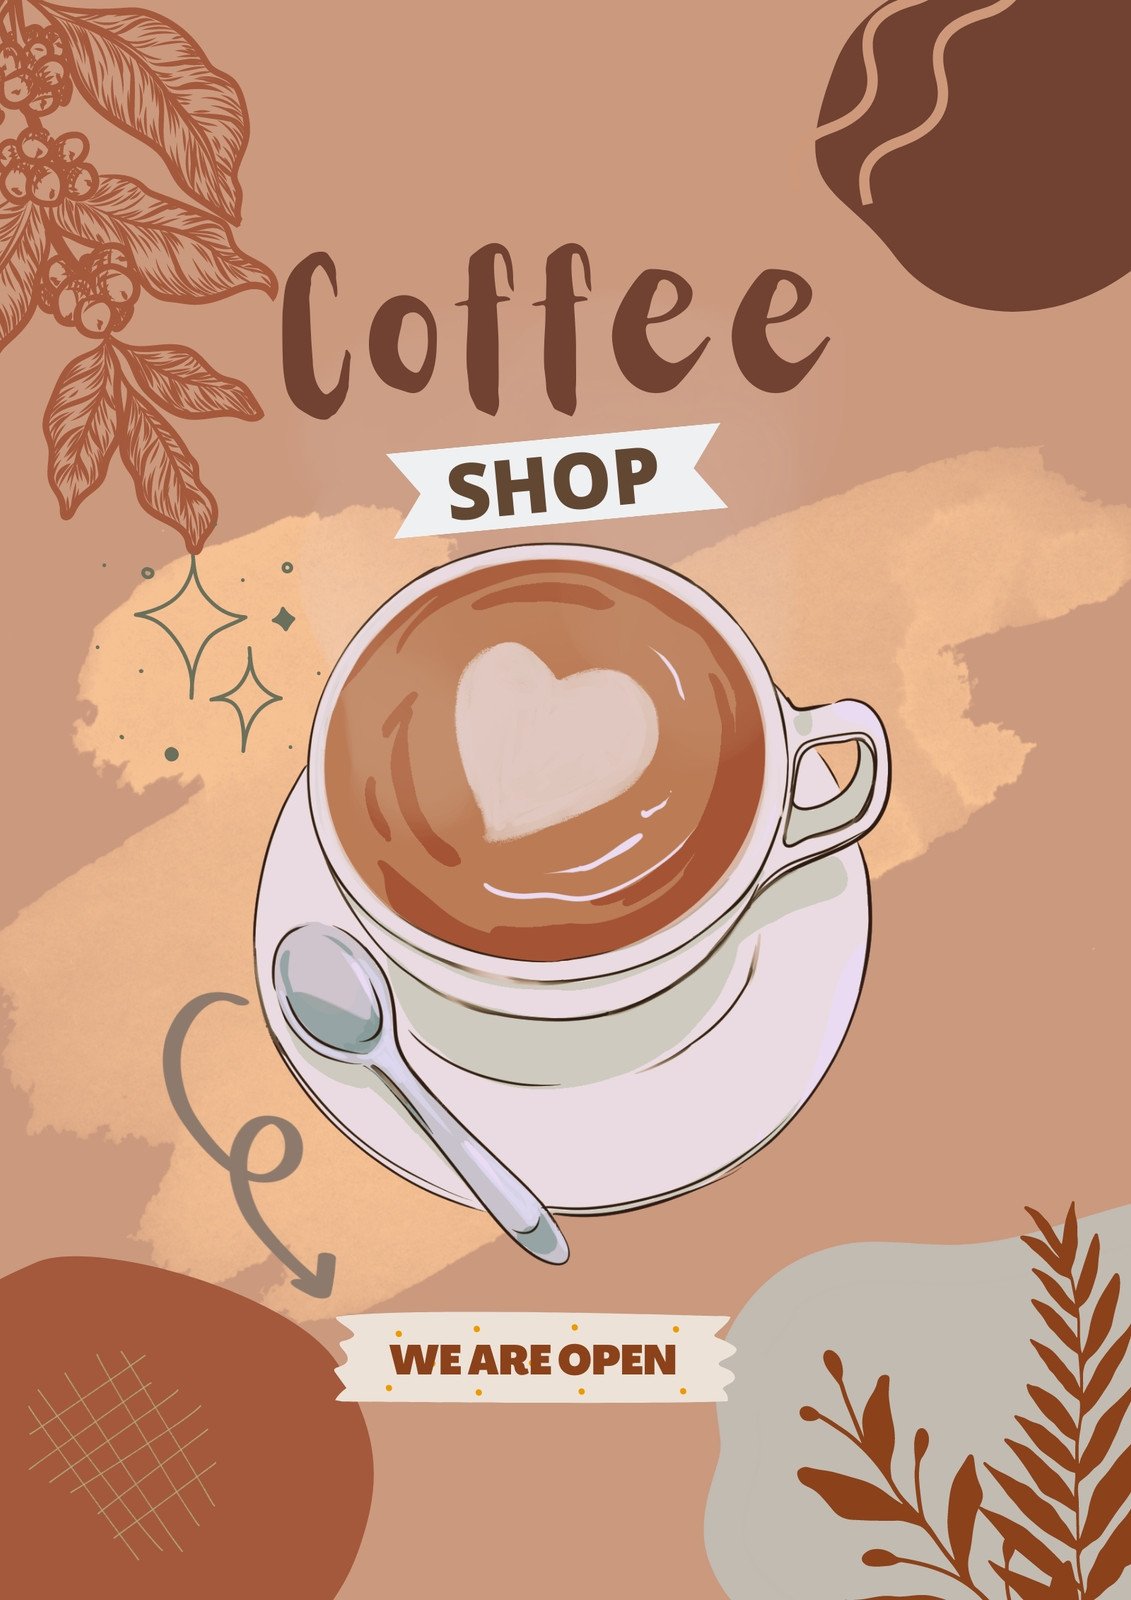 https://marketplace.canva.com/EAE-M0LQ64o/2/0/1131w/canva-brown-aesthetic-coffee-shop-%28flyer%29-MlRwfKVkRt4.jpg